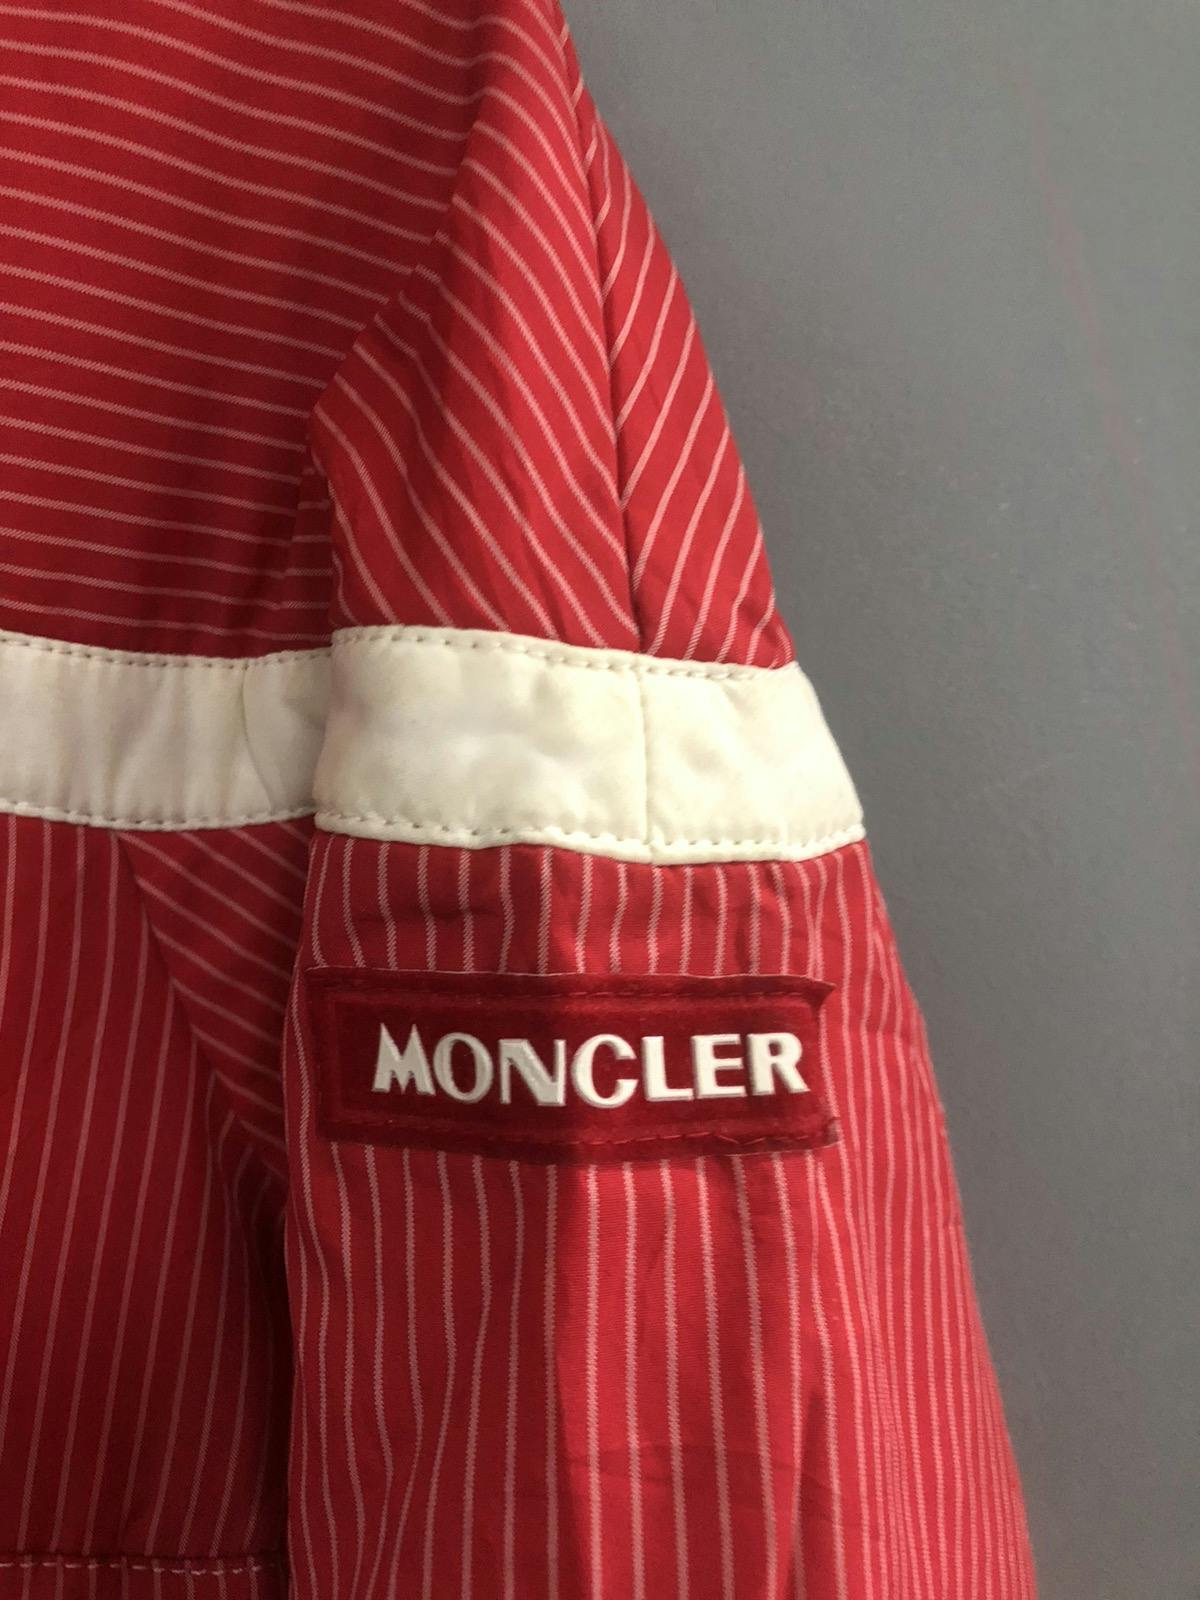 Vintage MONCLER ASICS Skiwear Jacket - 3